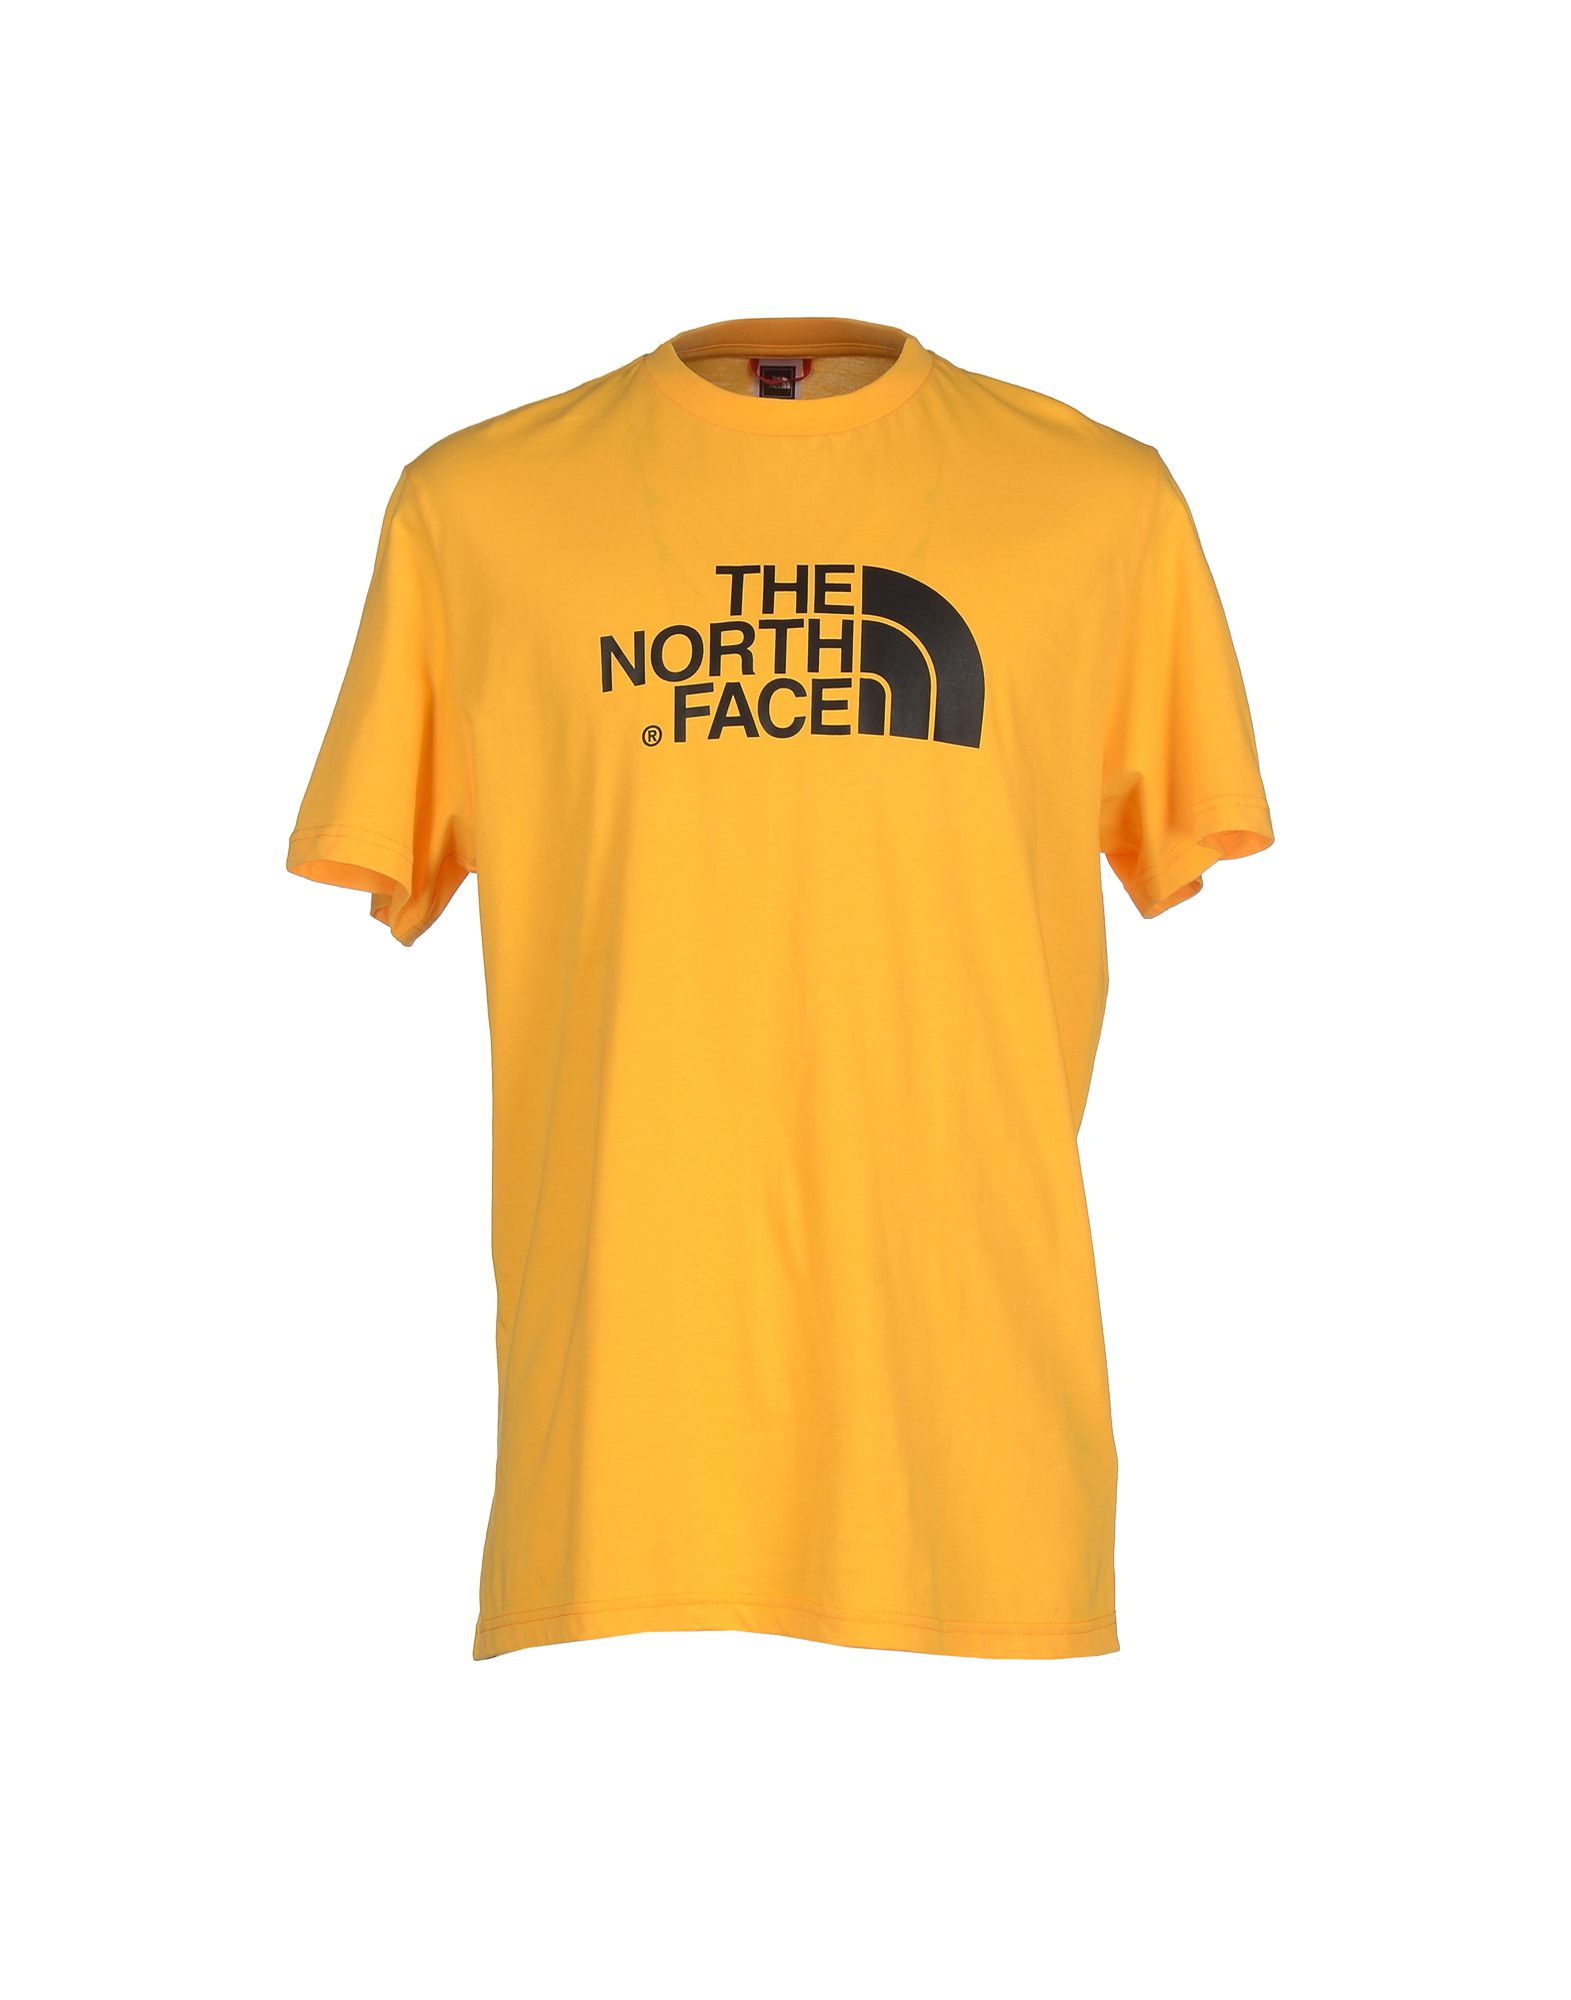 north face t shirt yellow 